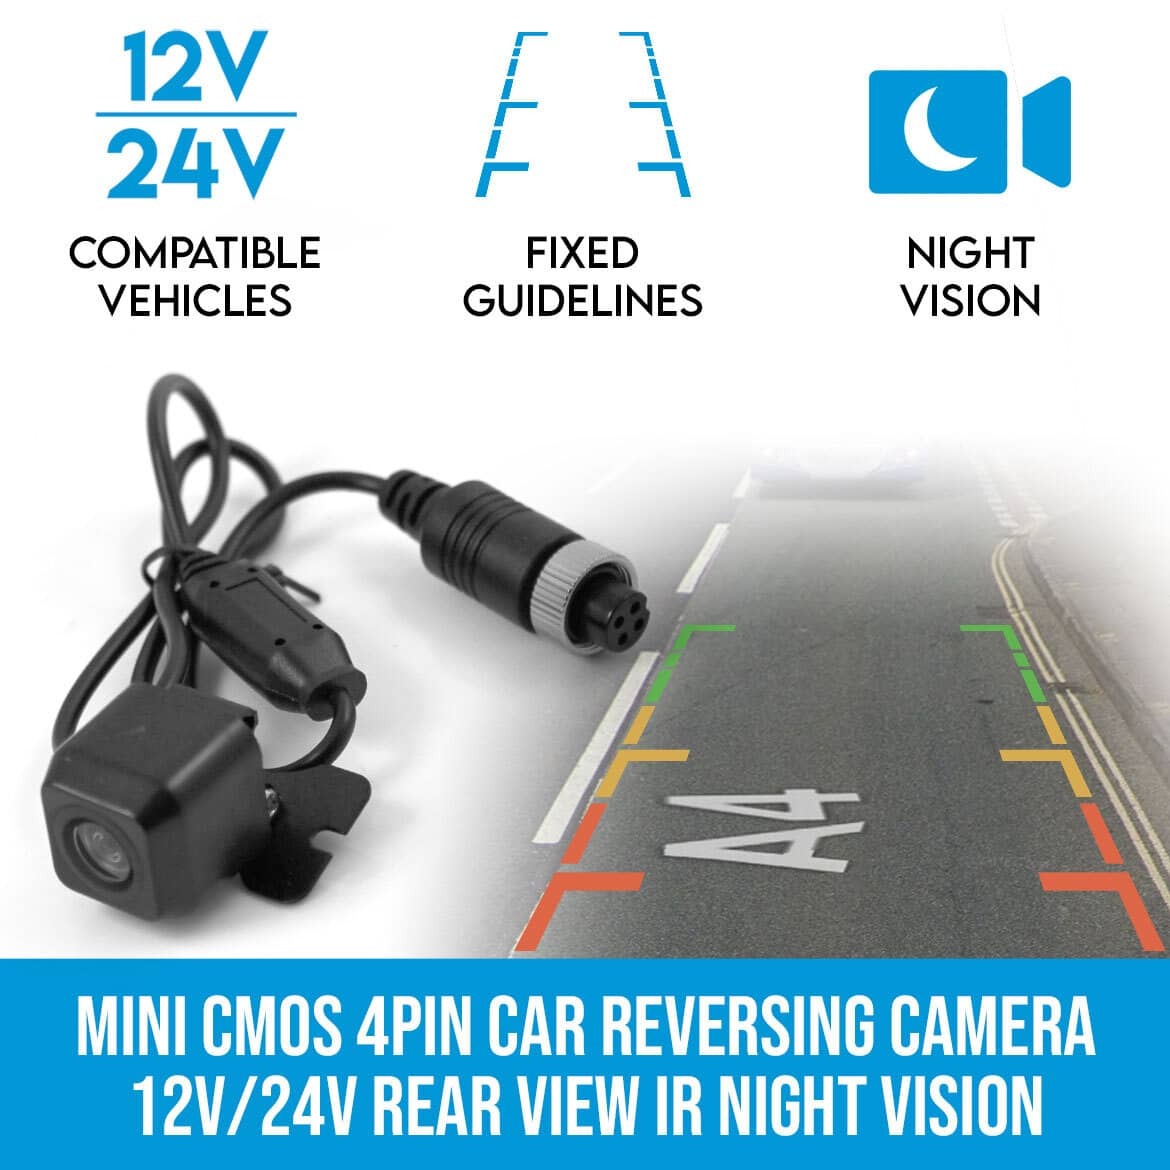 Mini CMOS 4PIN Car Reversing Camera Rear View IR Night Vision 12V/24V